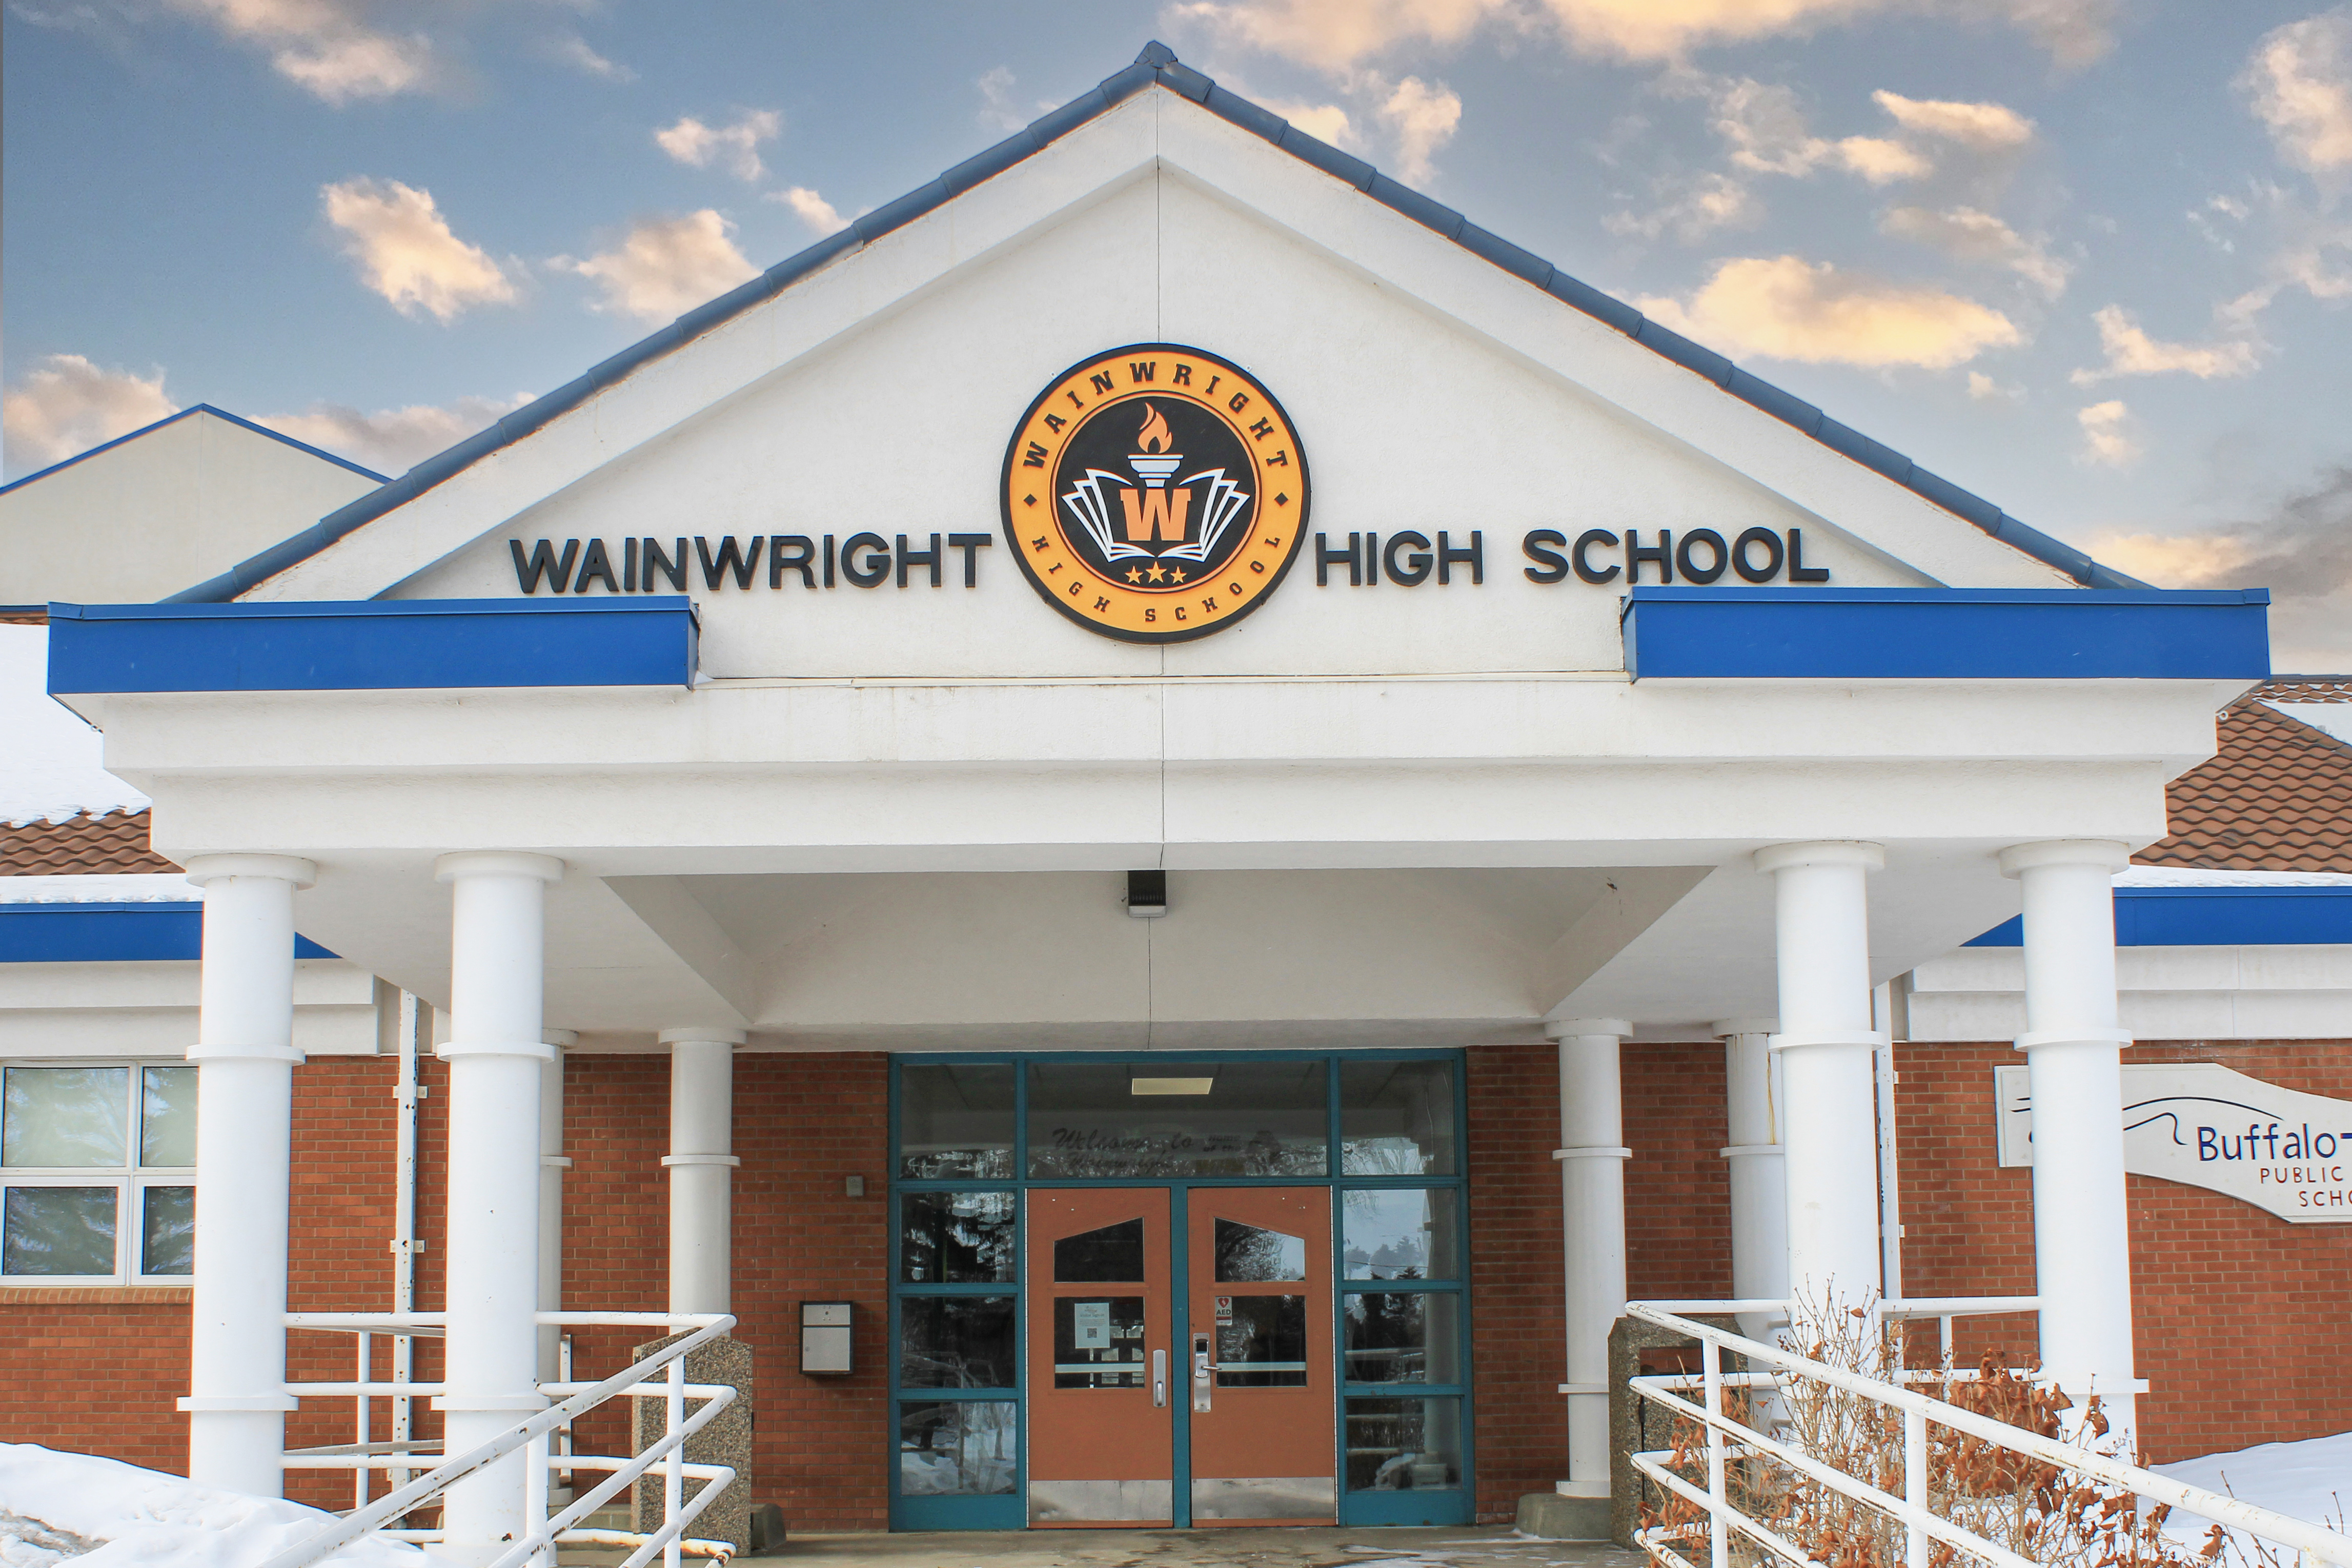 Wainwright High School